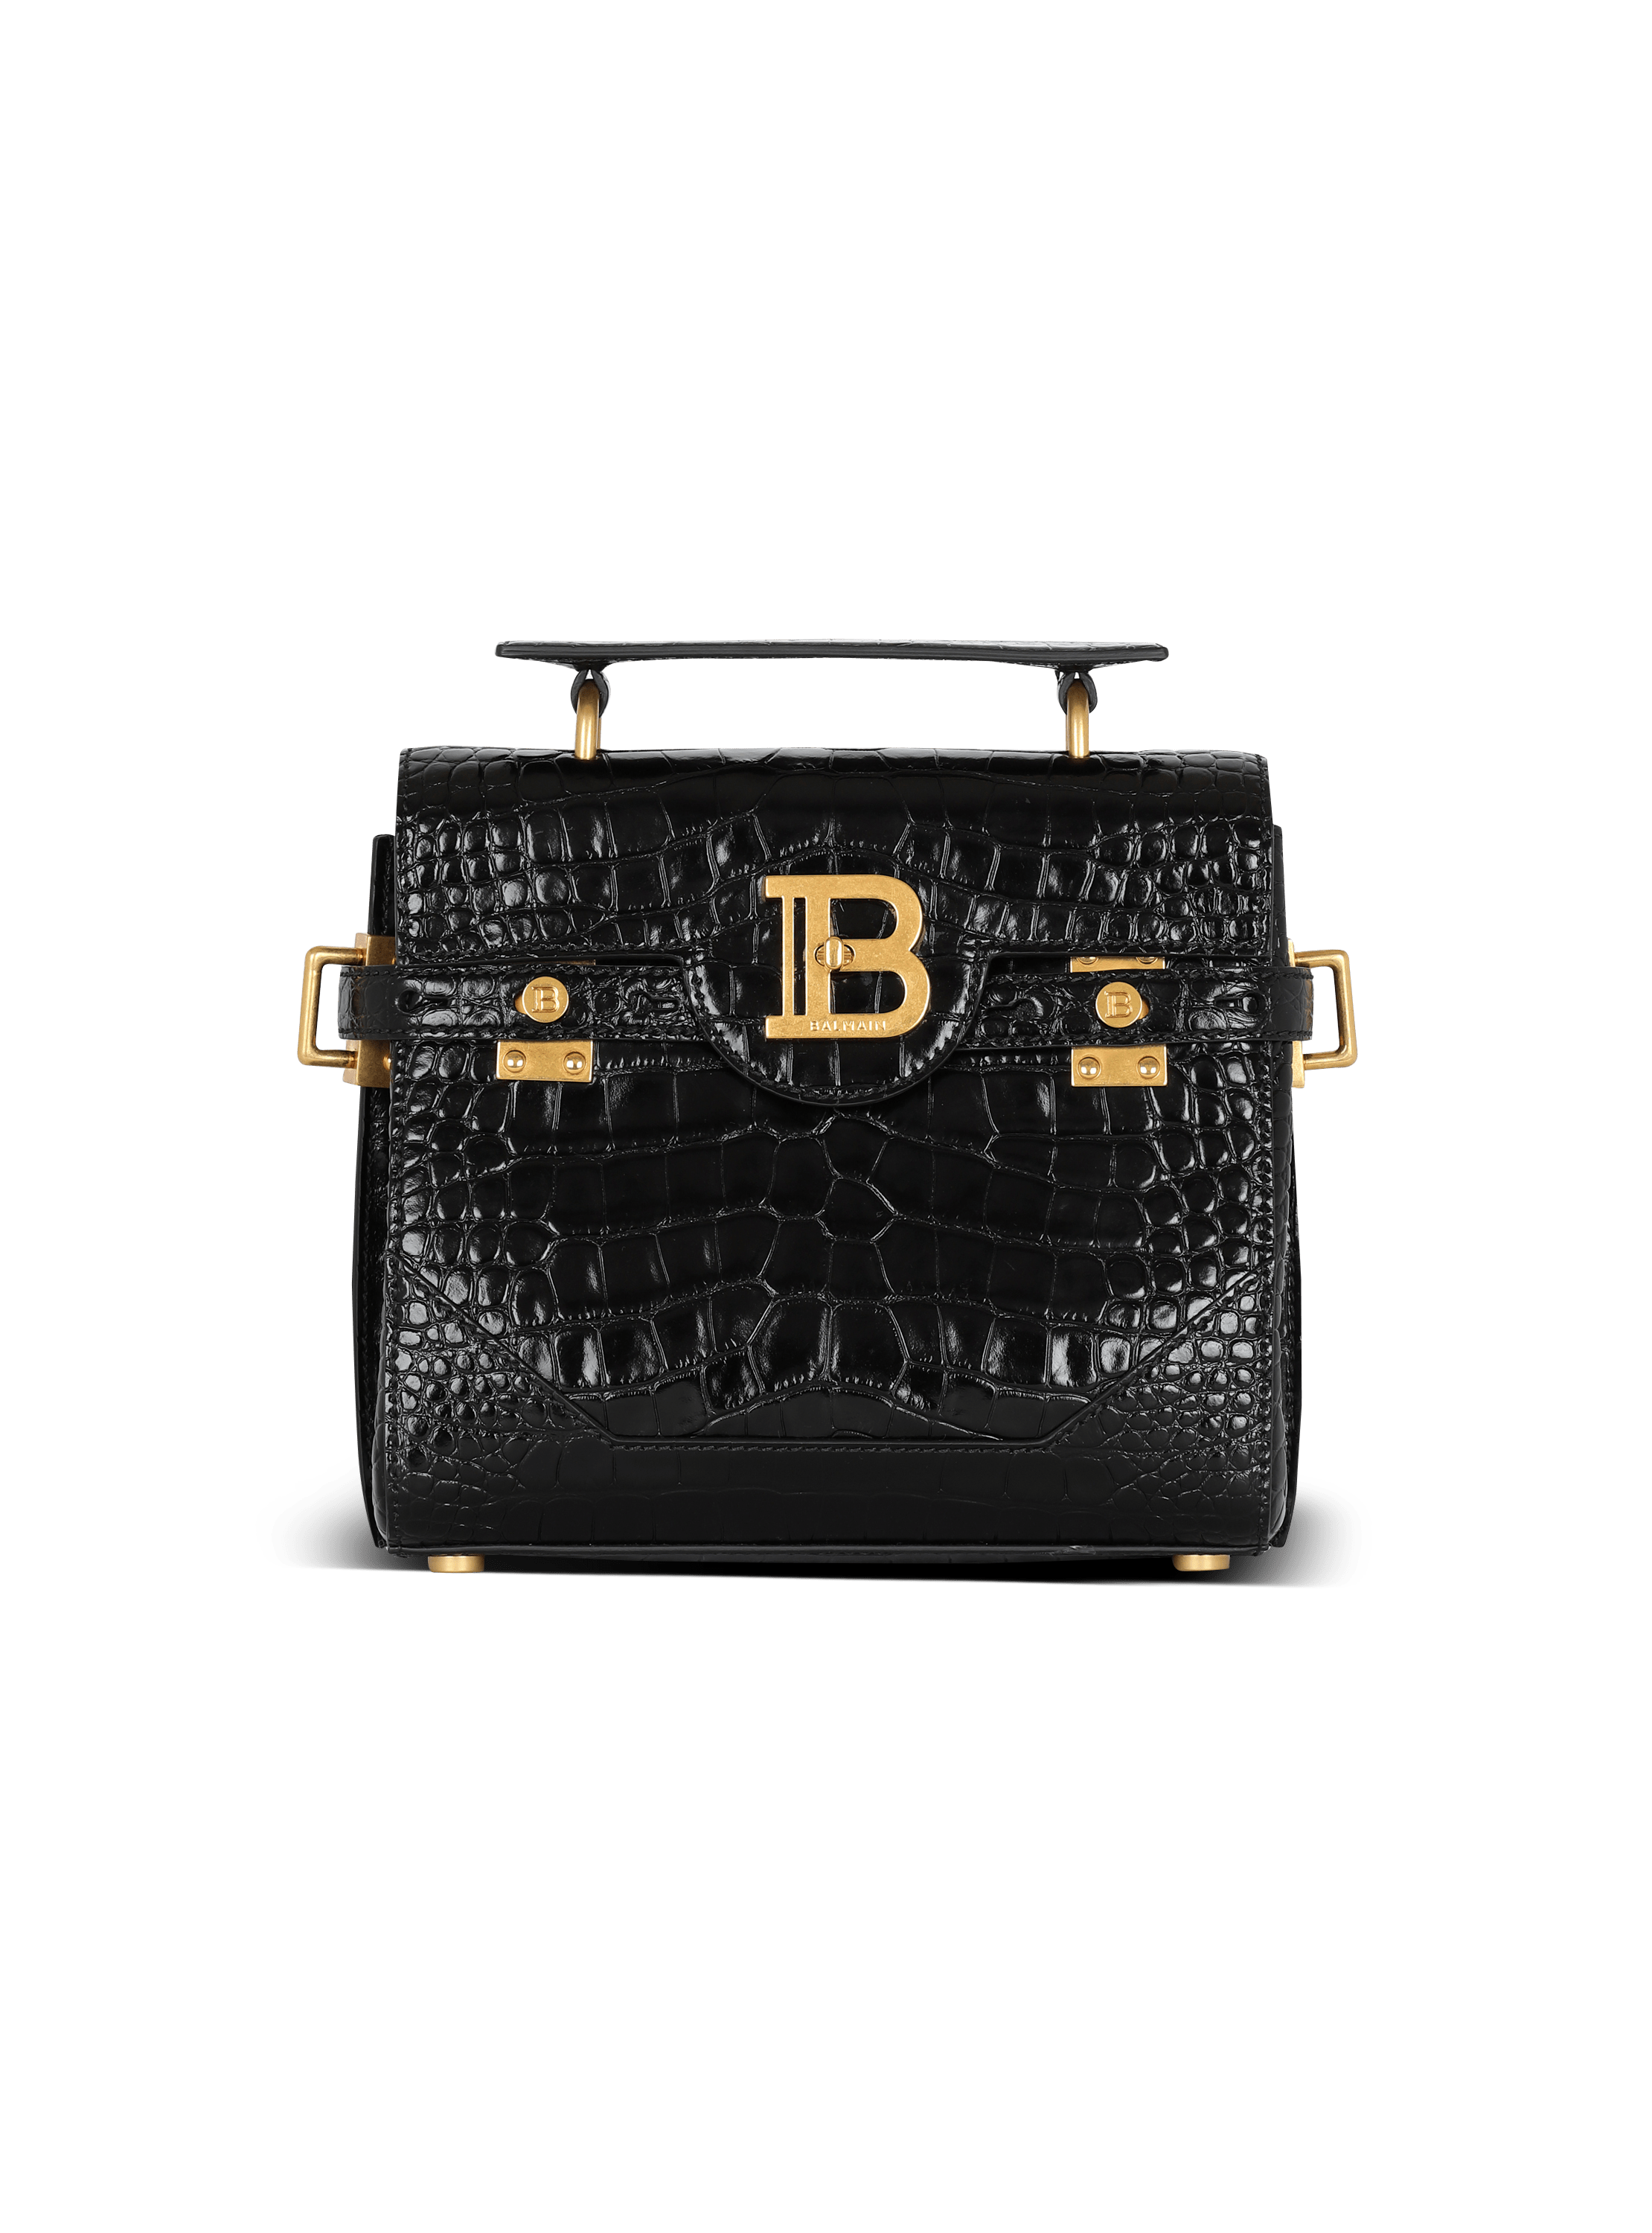 B-Buzz 23 bag in crocodile-print leather